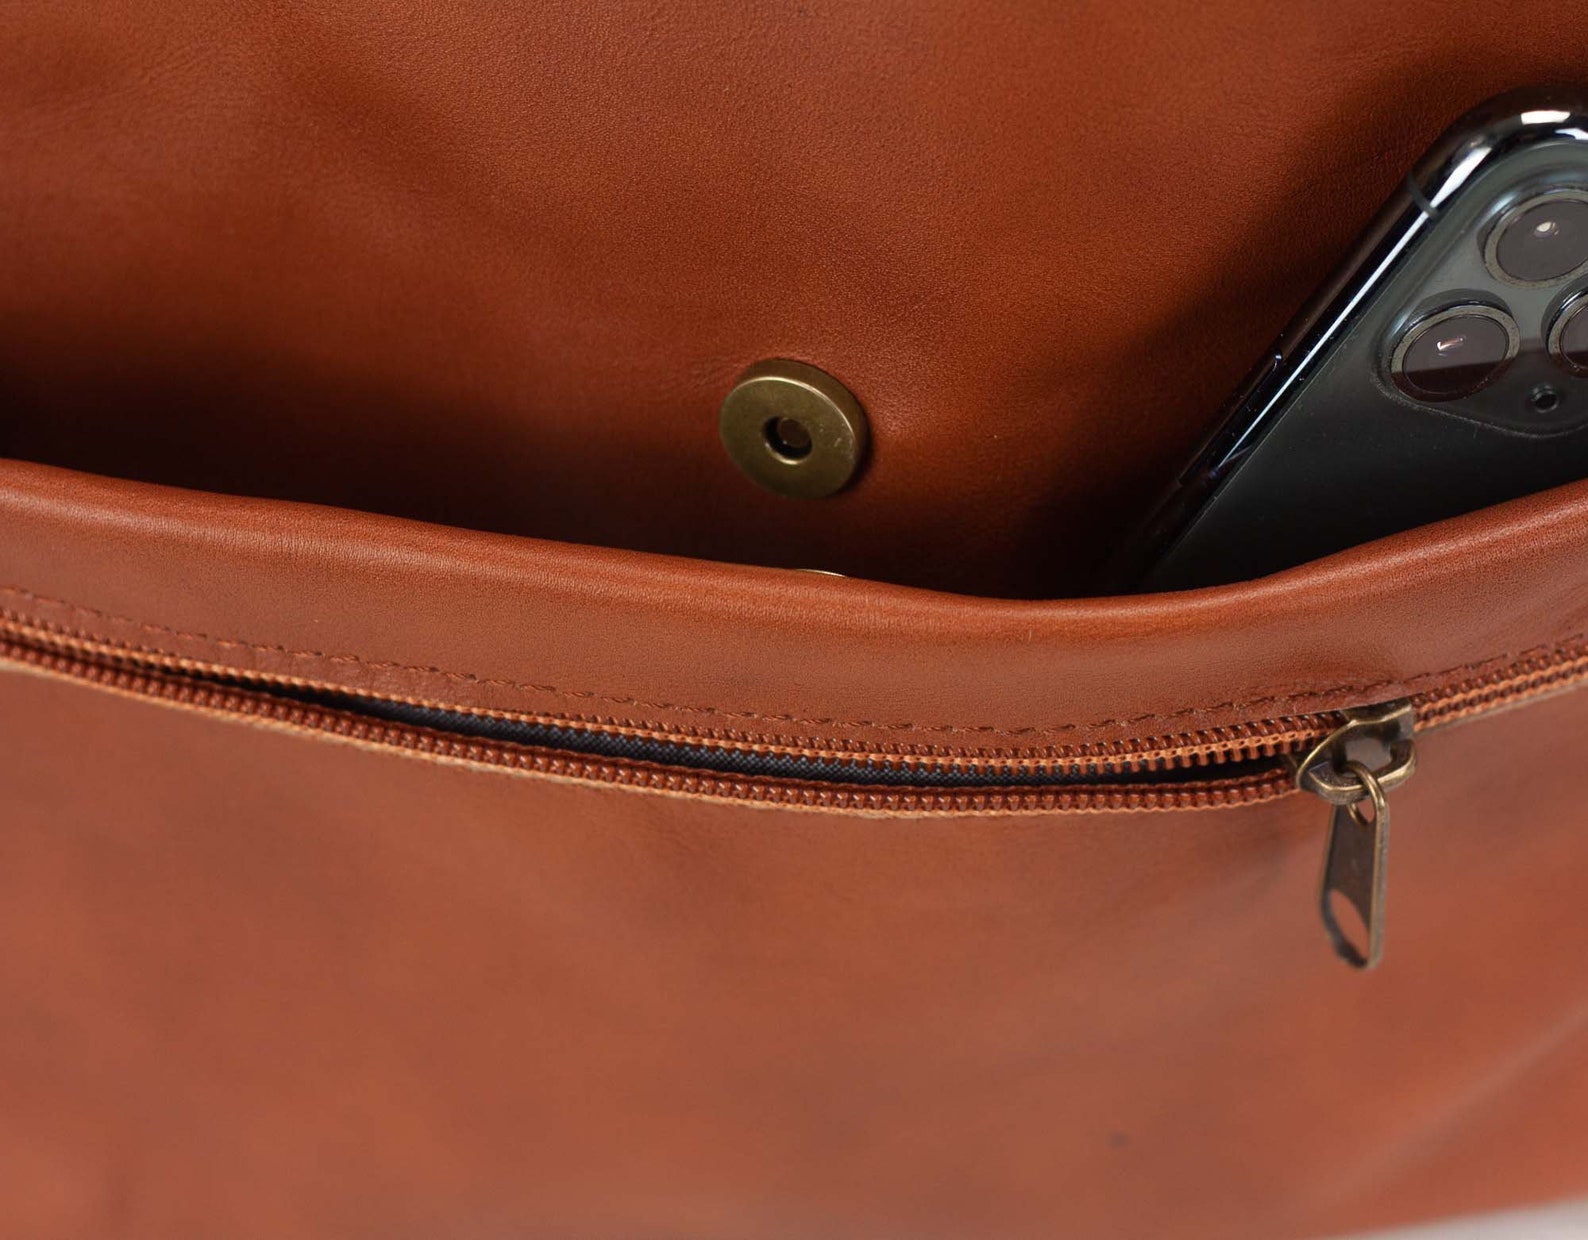 Caramel brown leather bag insert purse organizer diaper bag | Etsy